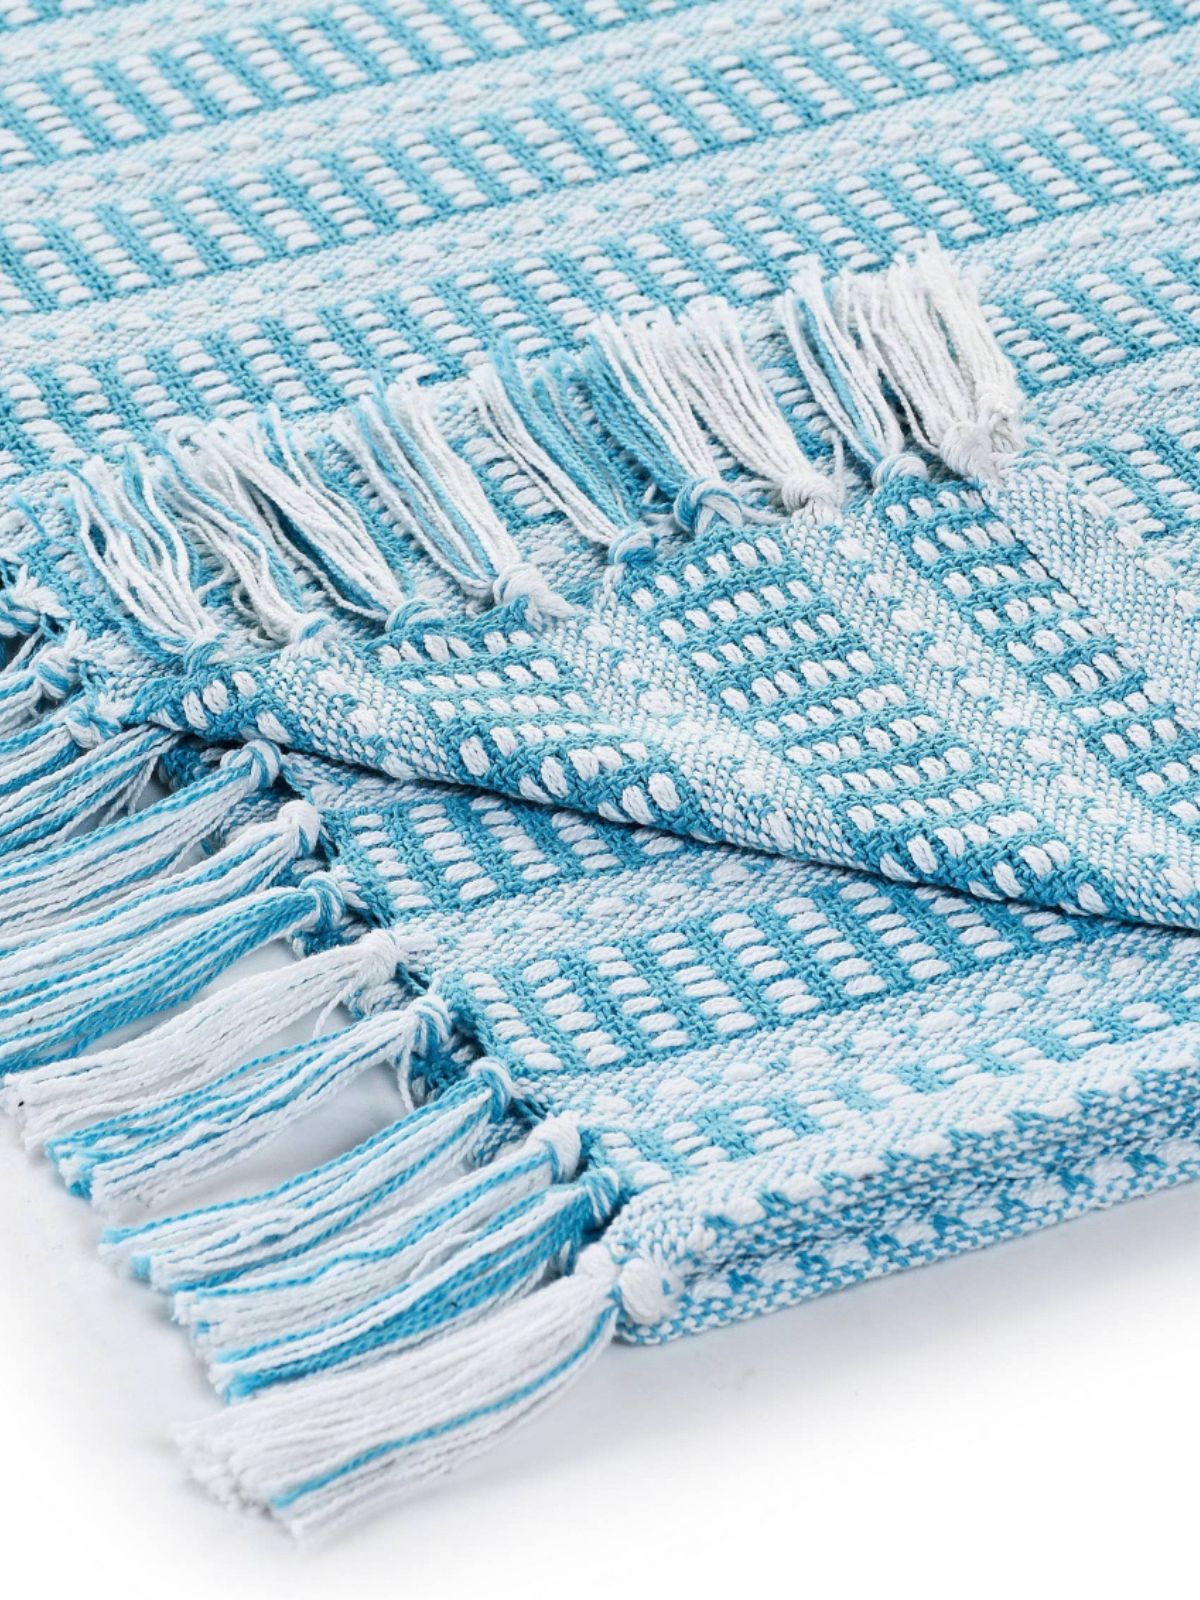 100% Cotton Handmade Flat-Woven Maui Blue and White Geometric Striped Lightweight Decorative Throw Blanket with Corner Tassel.